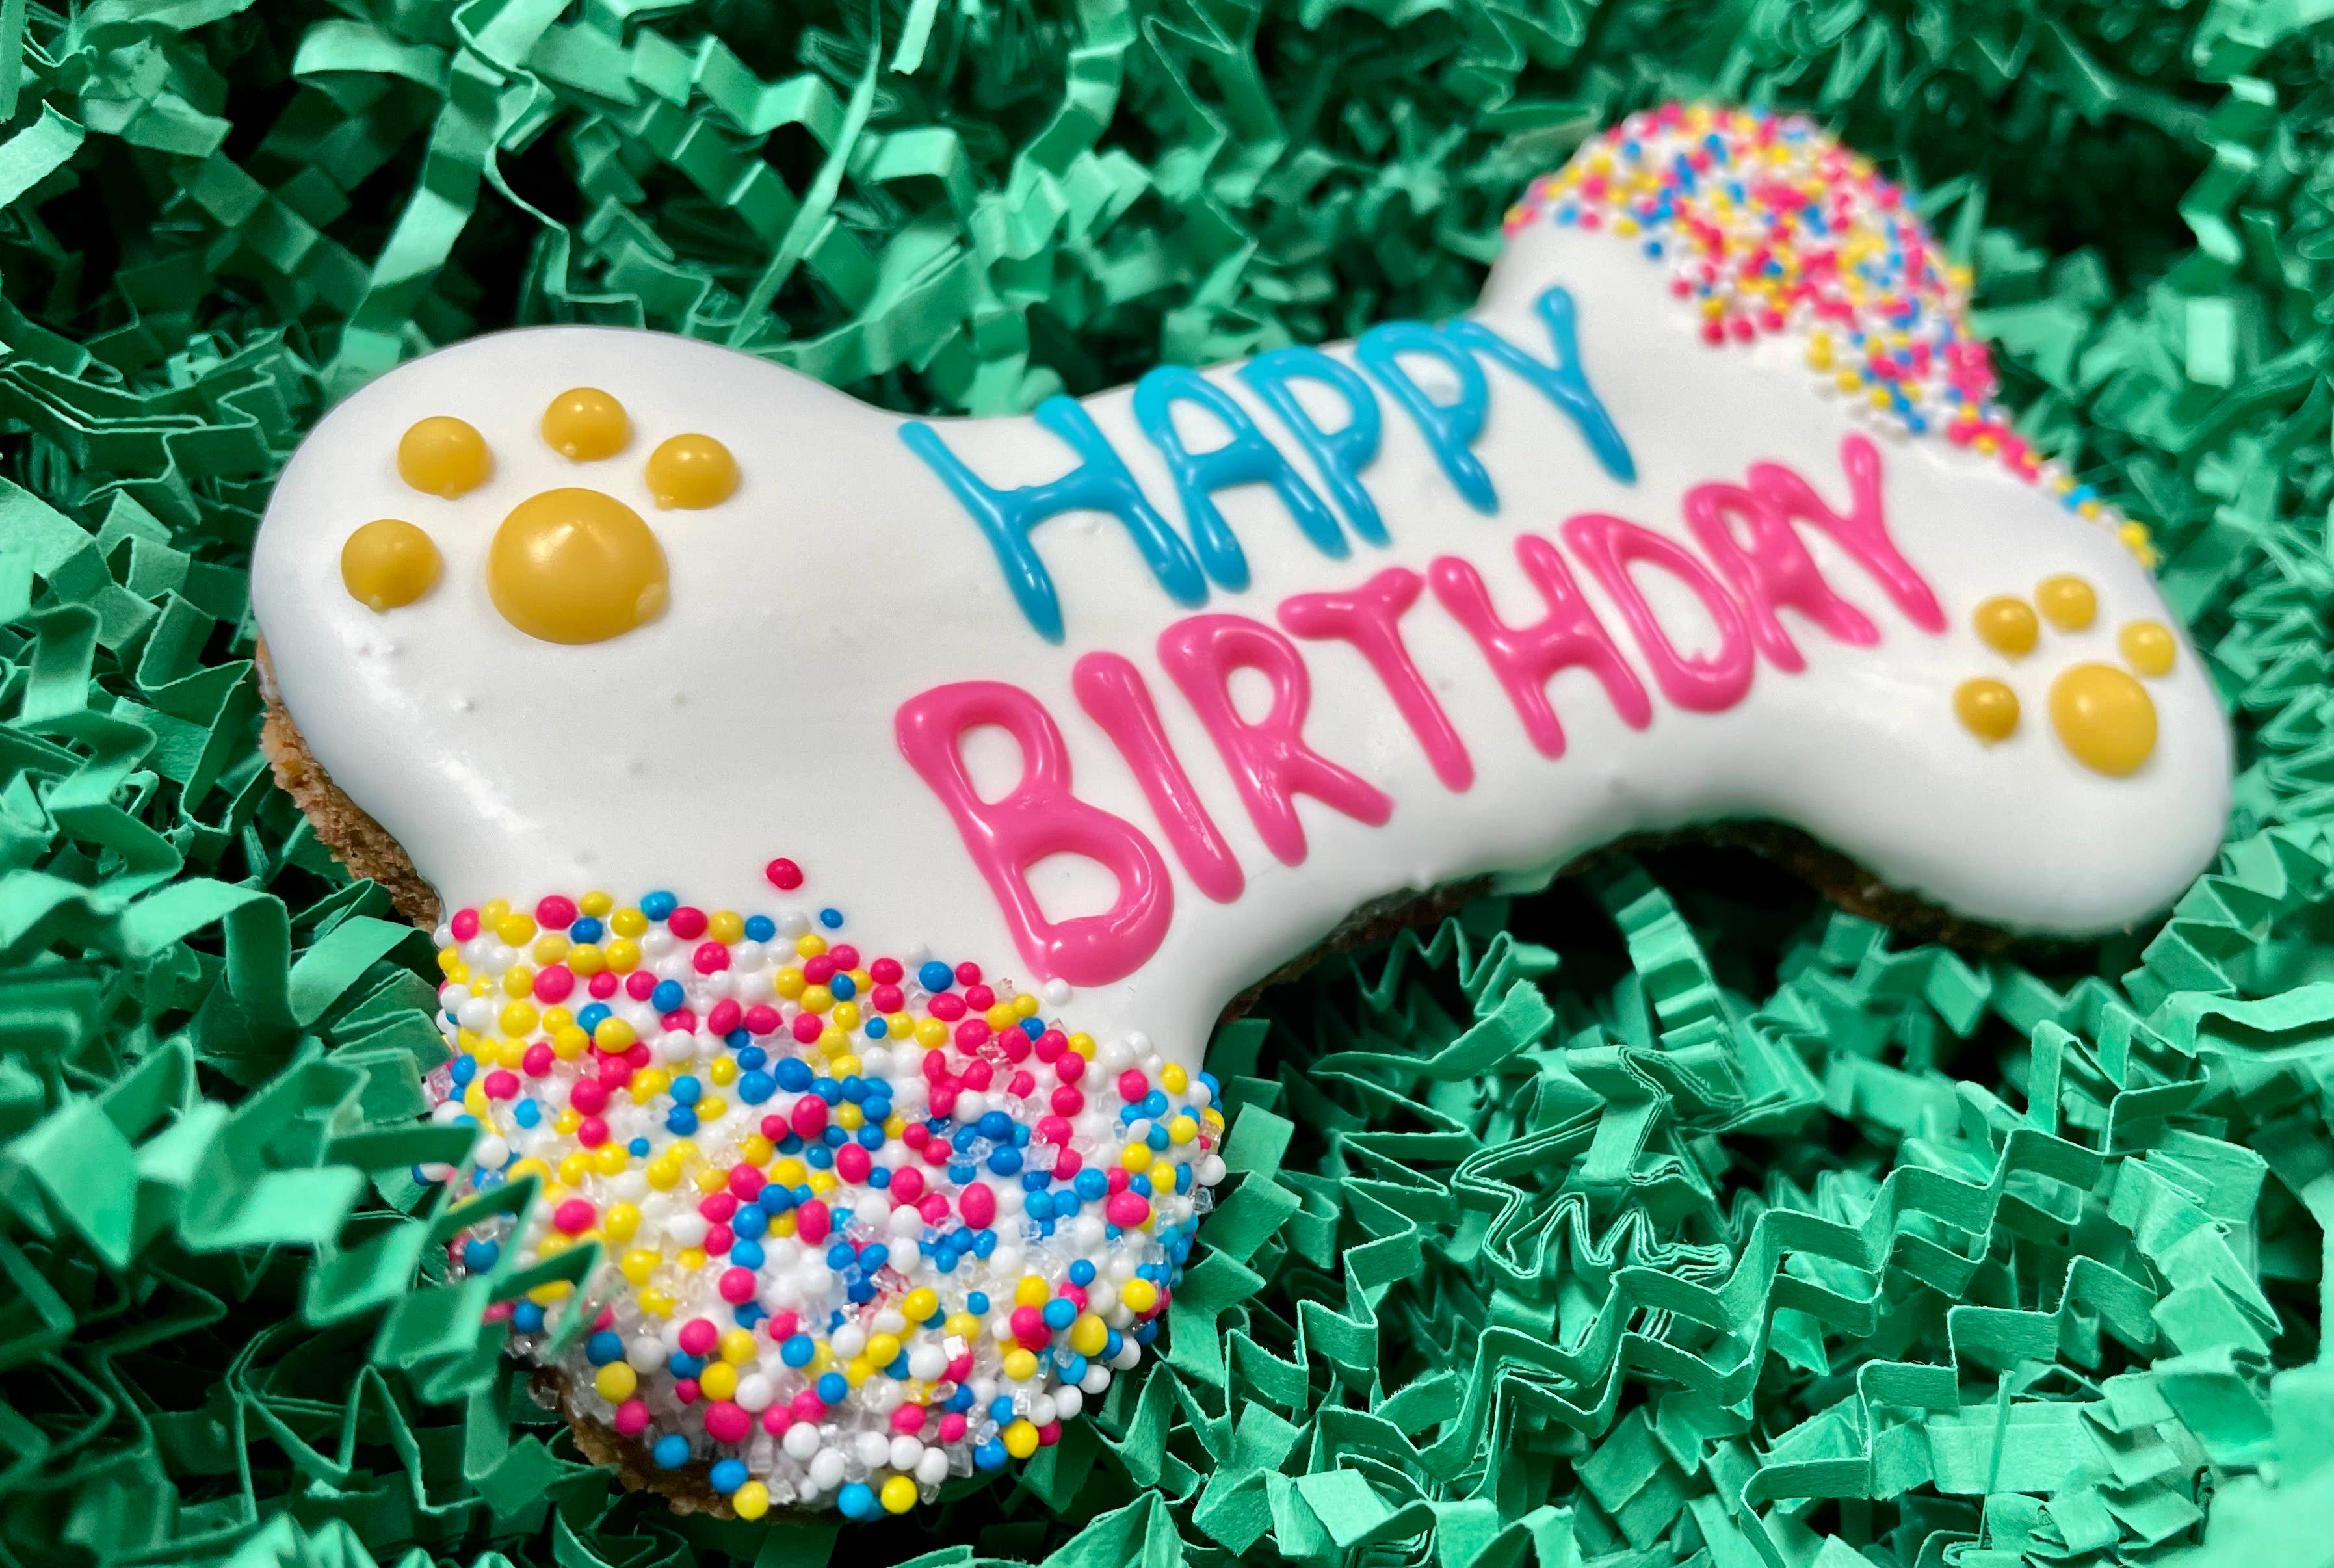 YumYum4DOGS - Fiesta Happy Birthday Bone Dog Treats